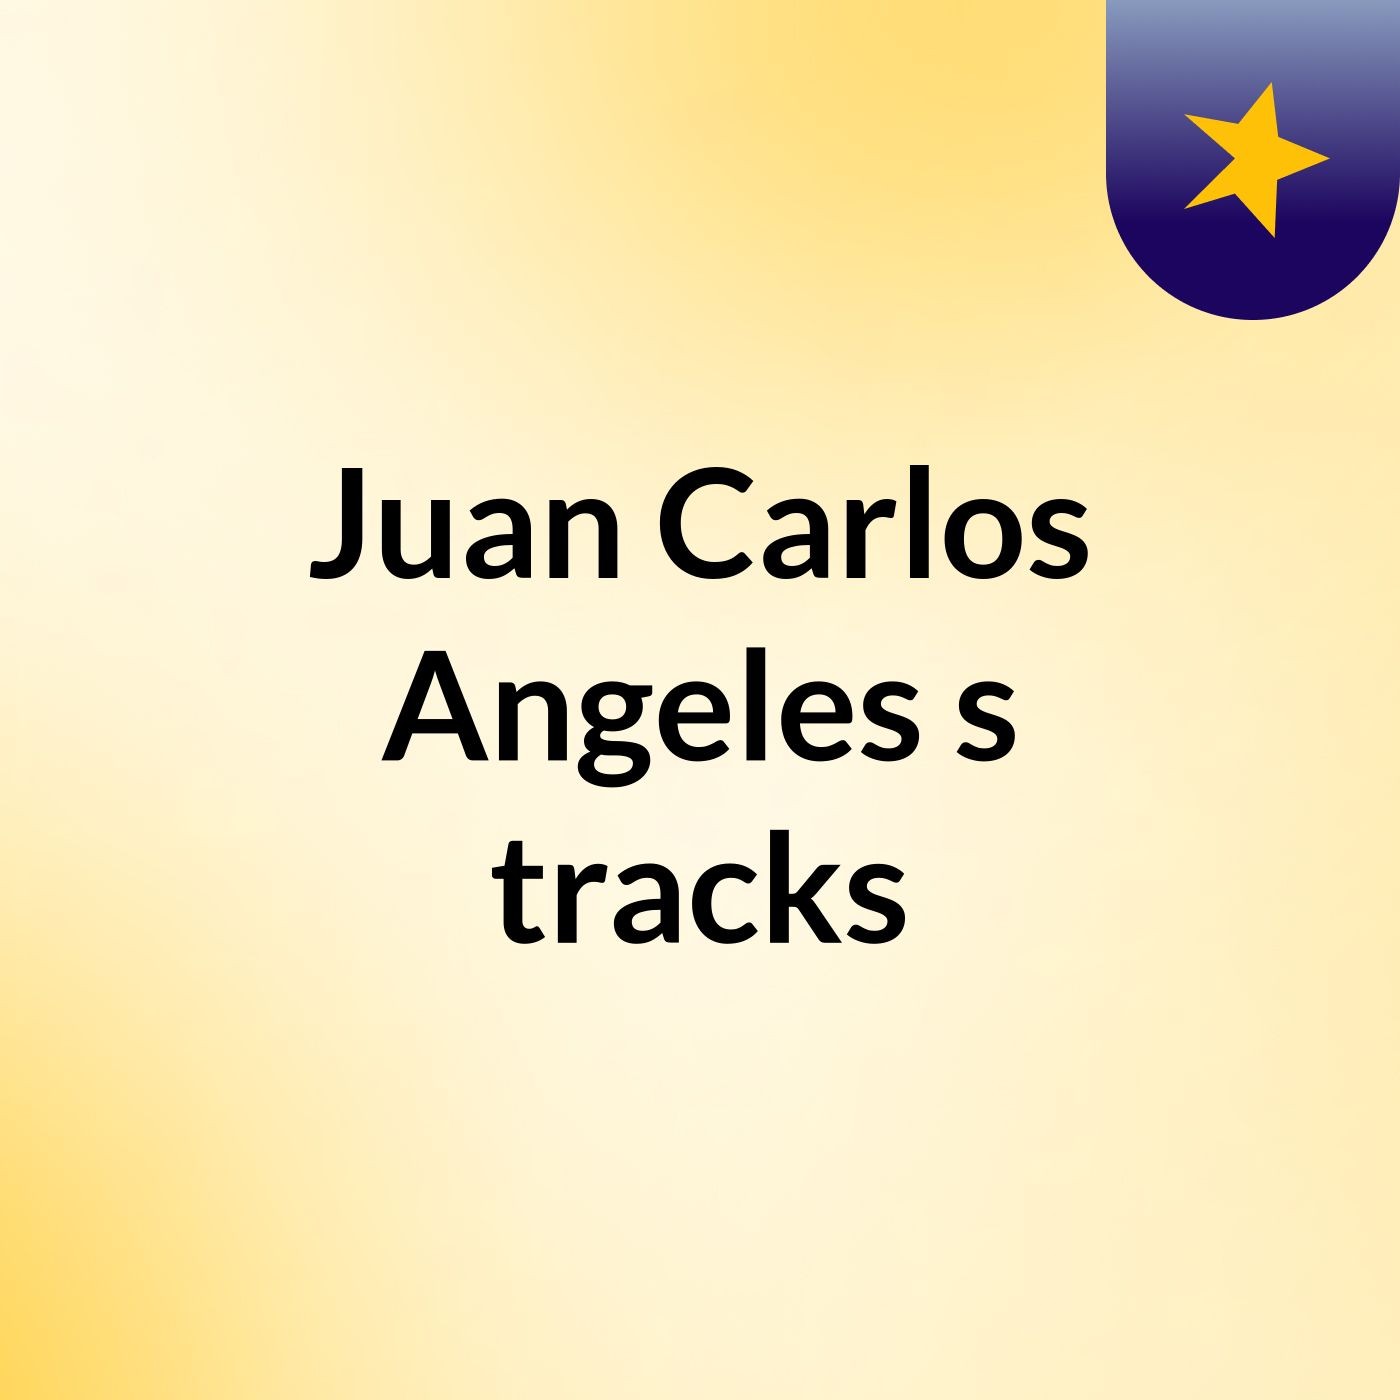 Juan Carlos Angeles's tracks